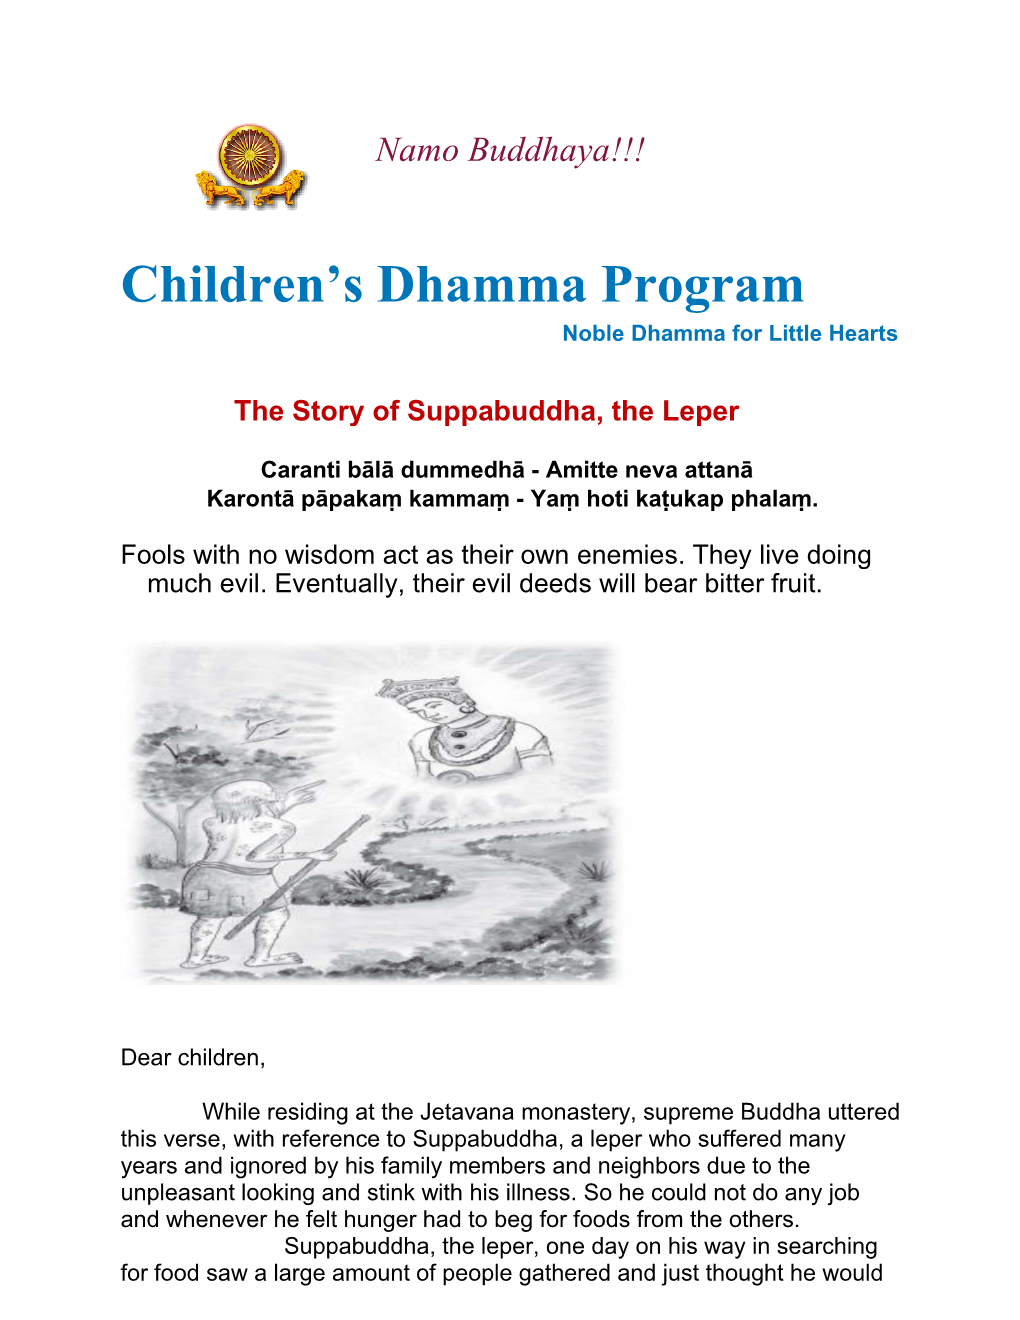 Children's Dhamma Program